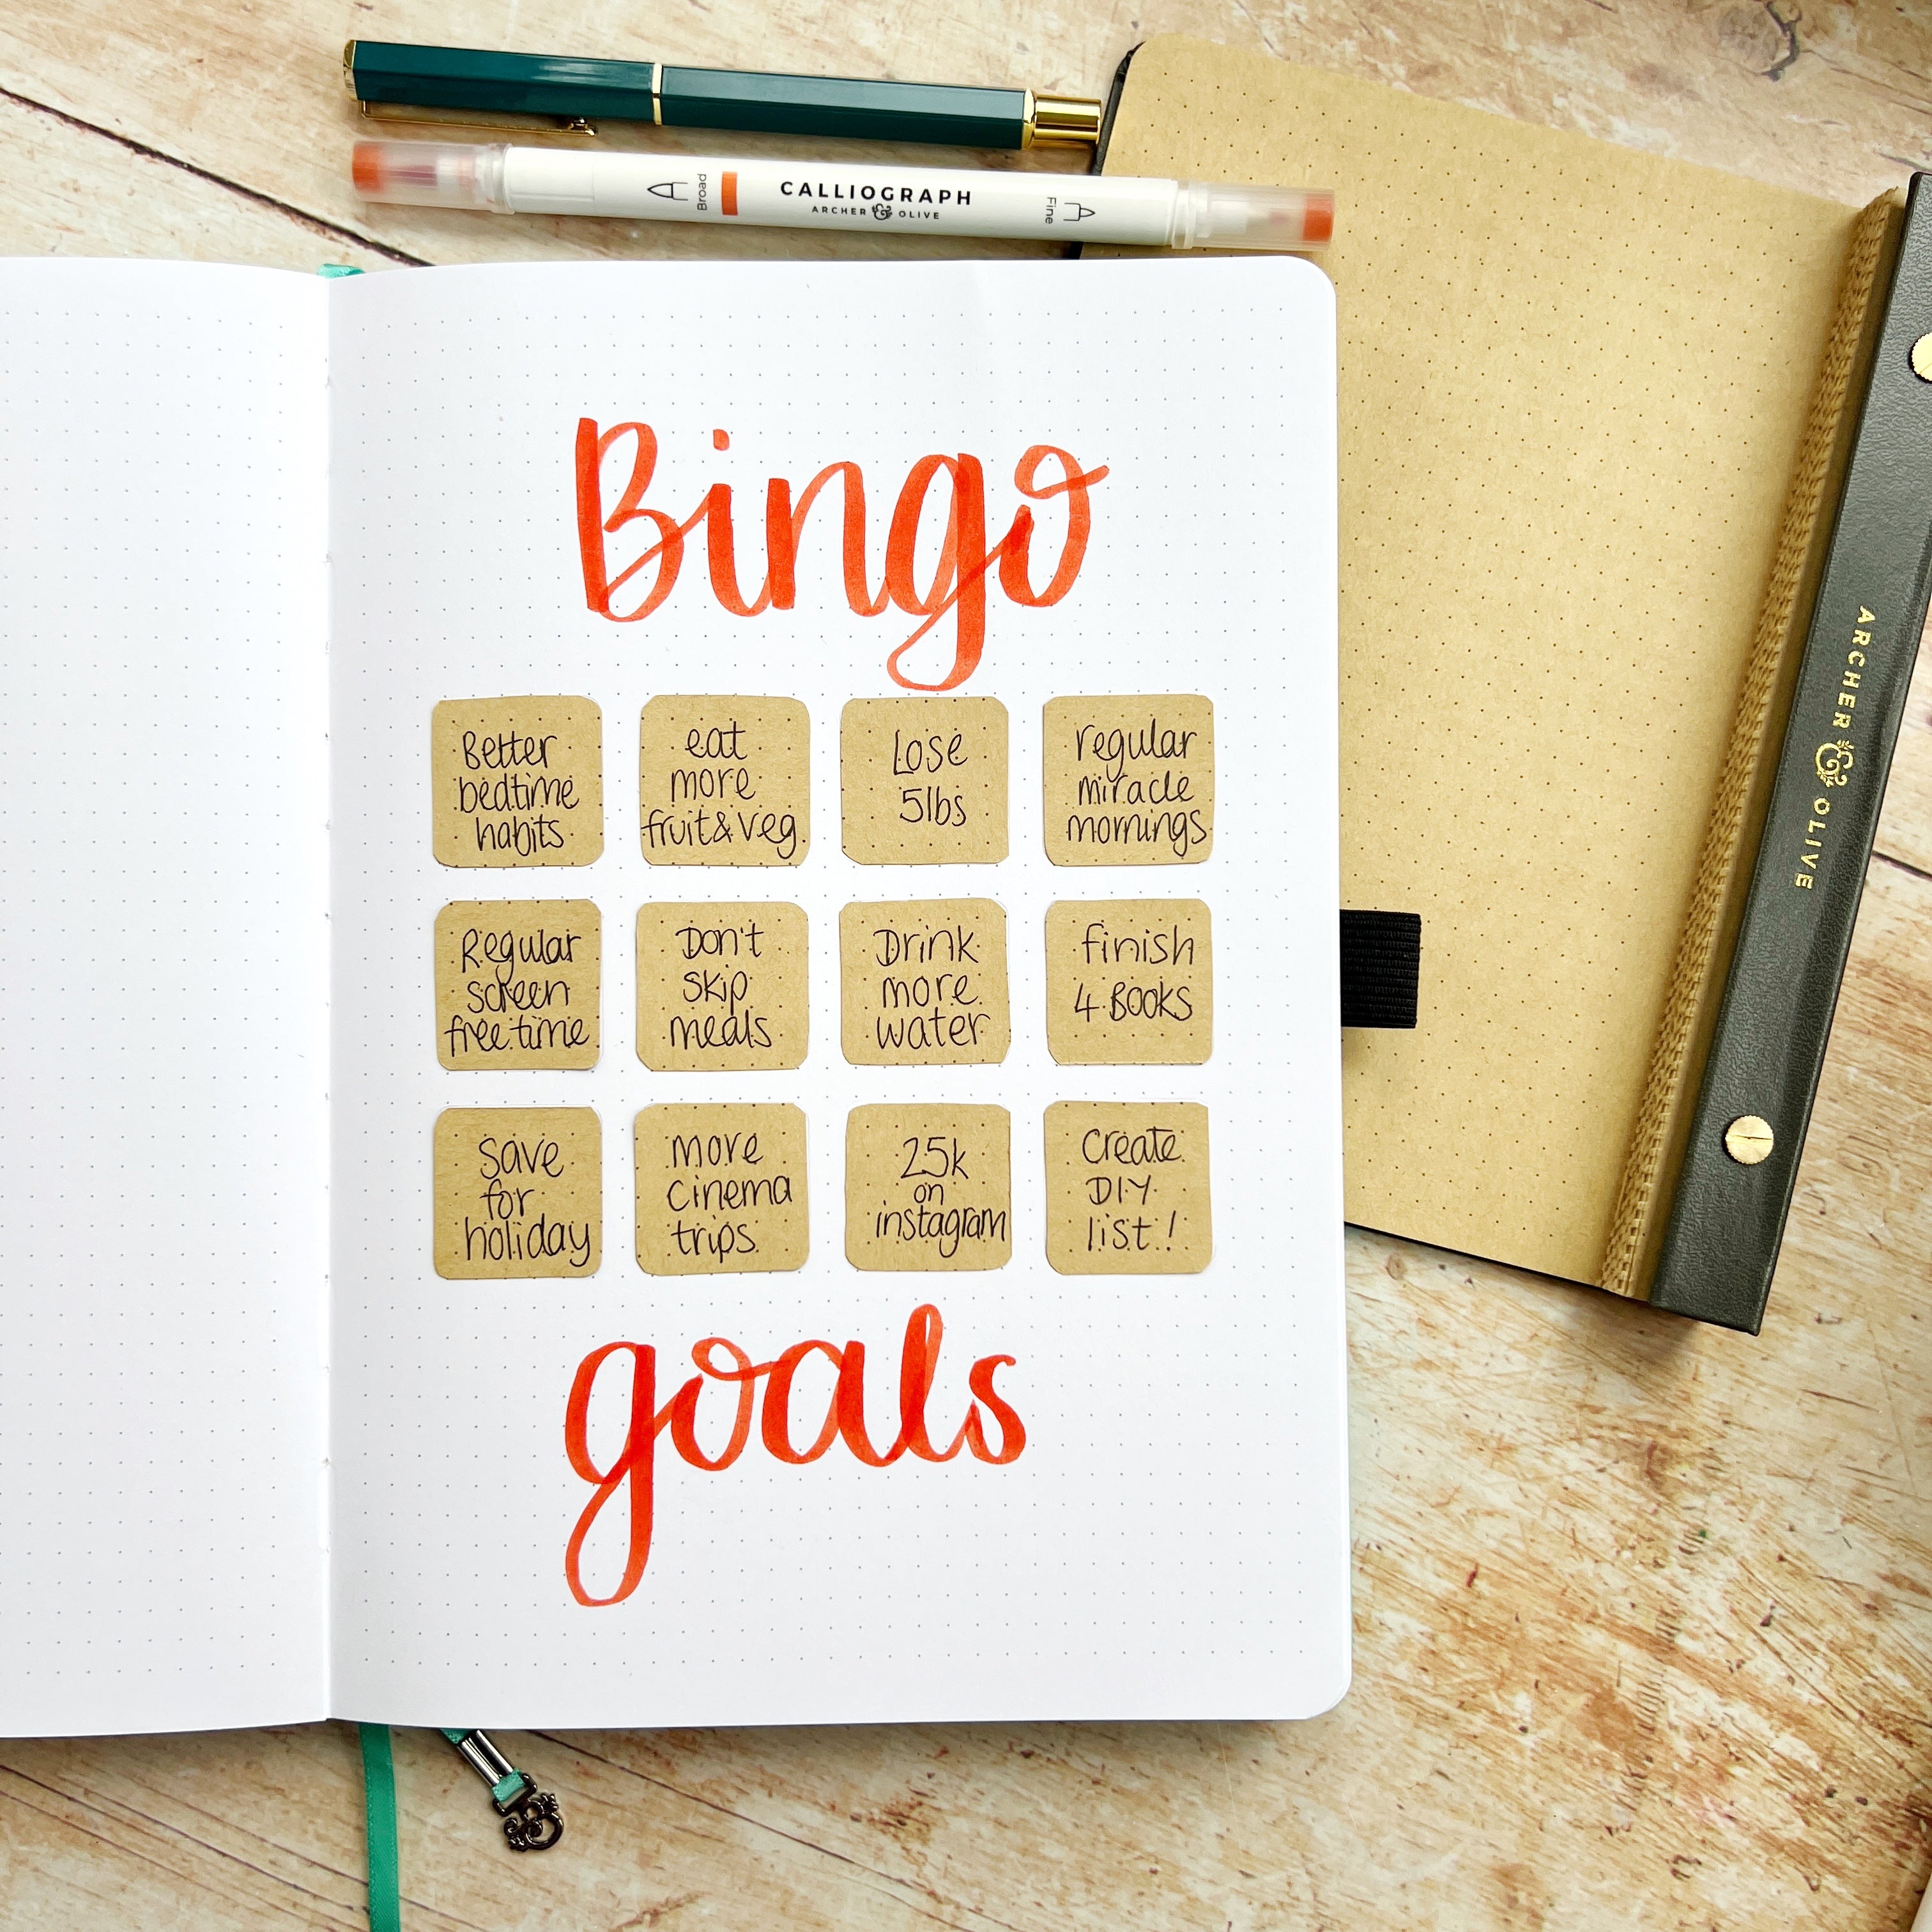 bingo goals added to kraft paper squares